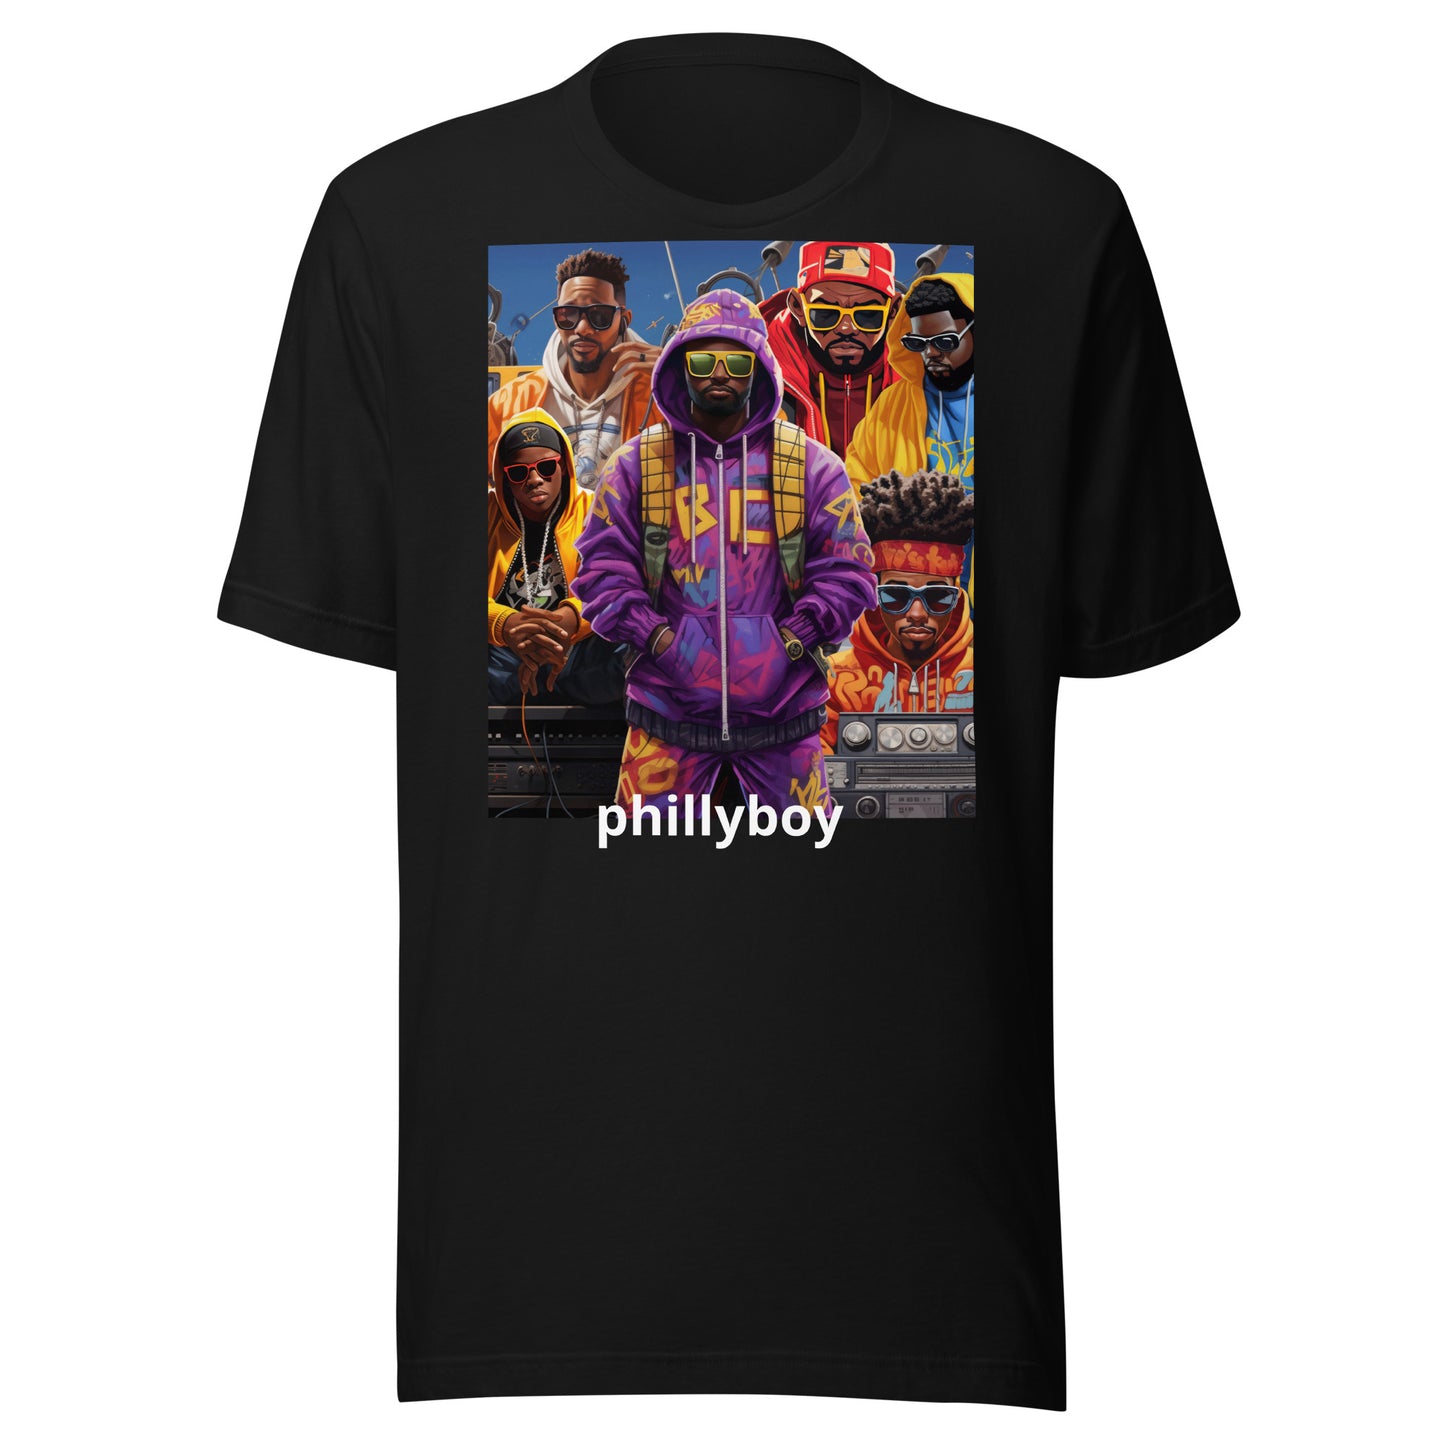 phillyboy crew shirt Unisex t-shirt